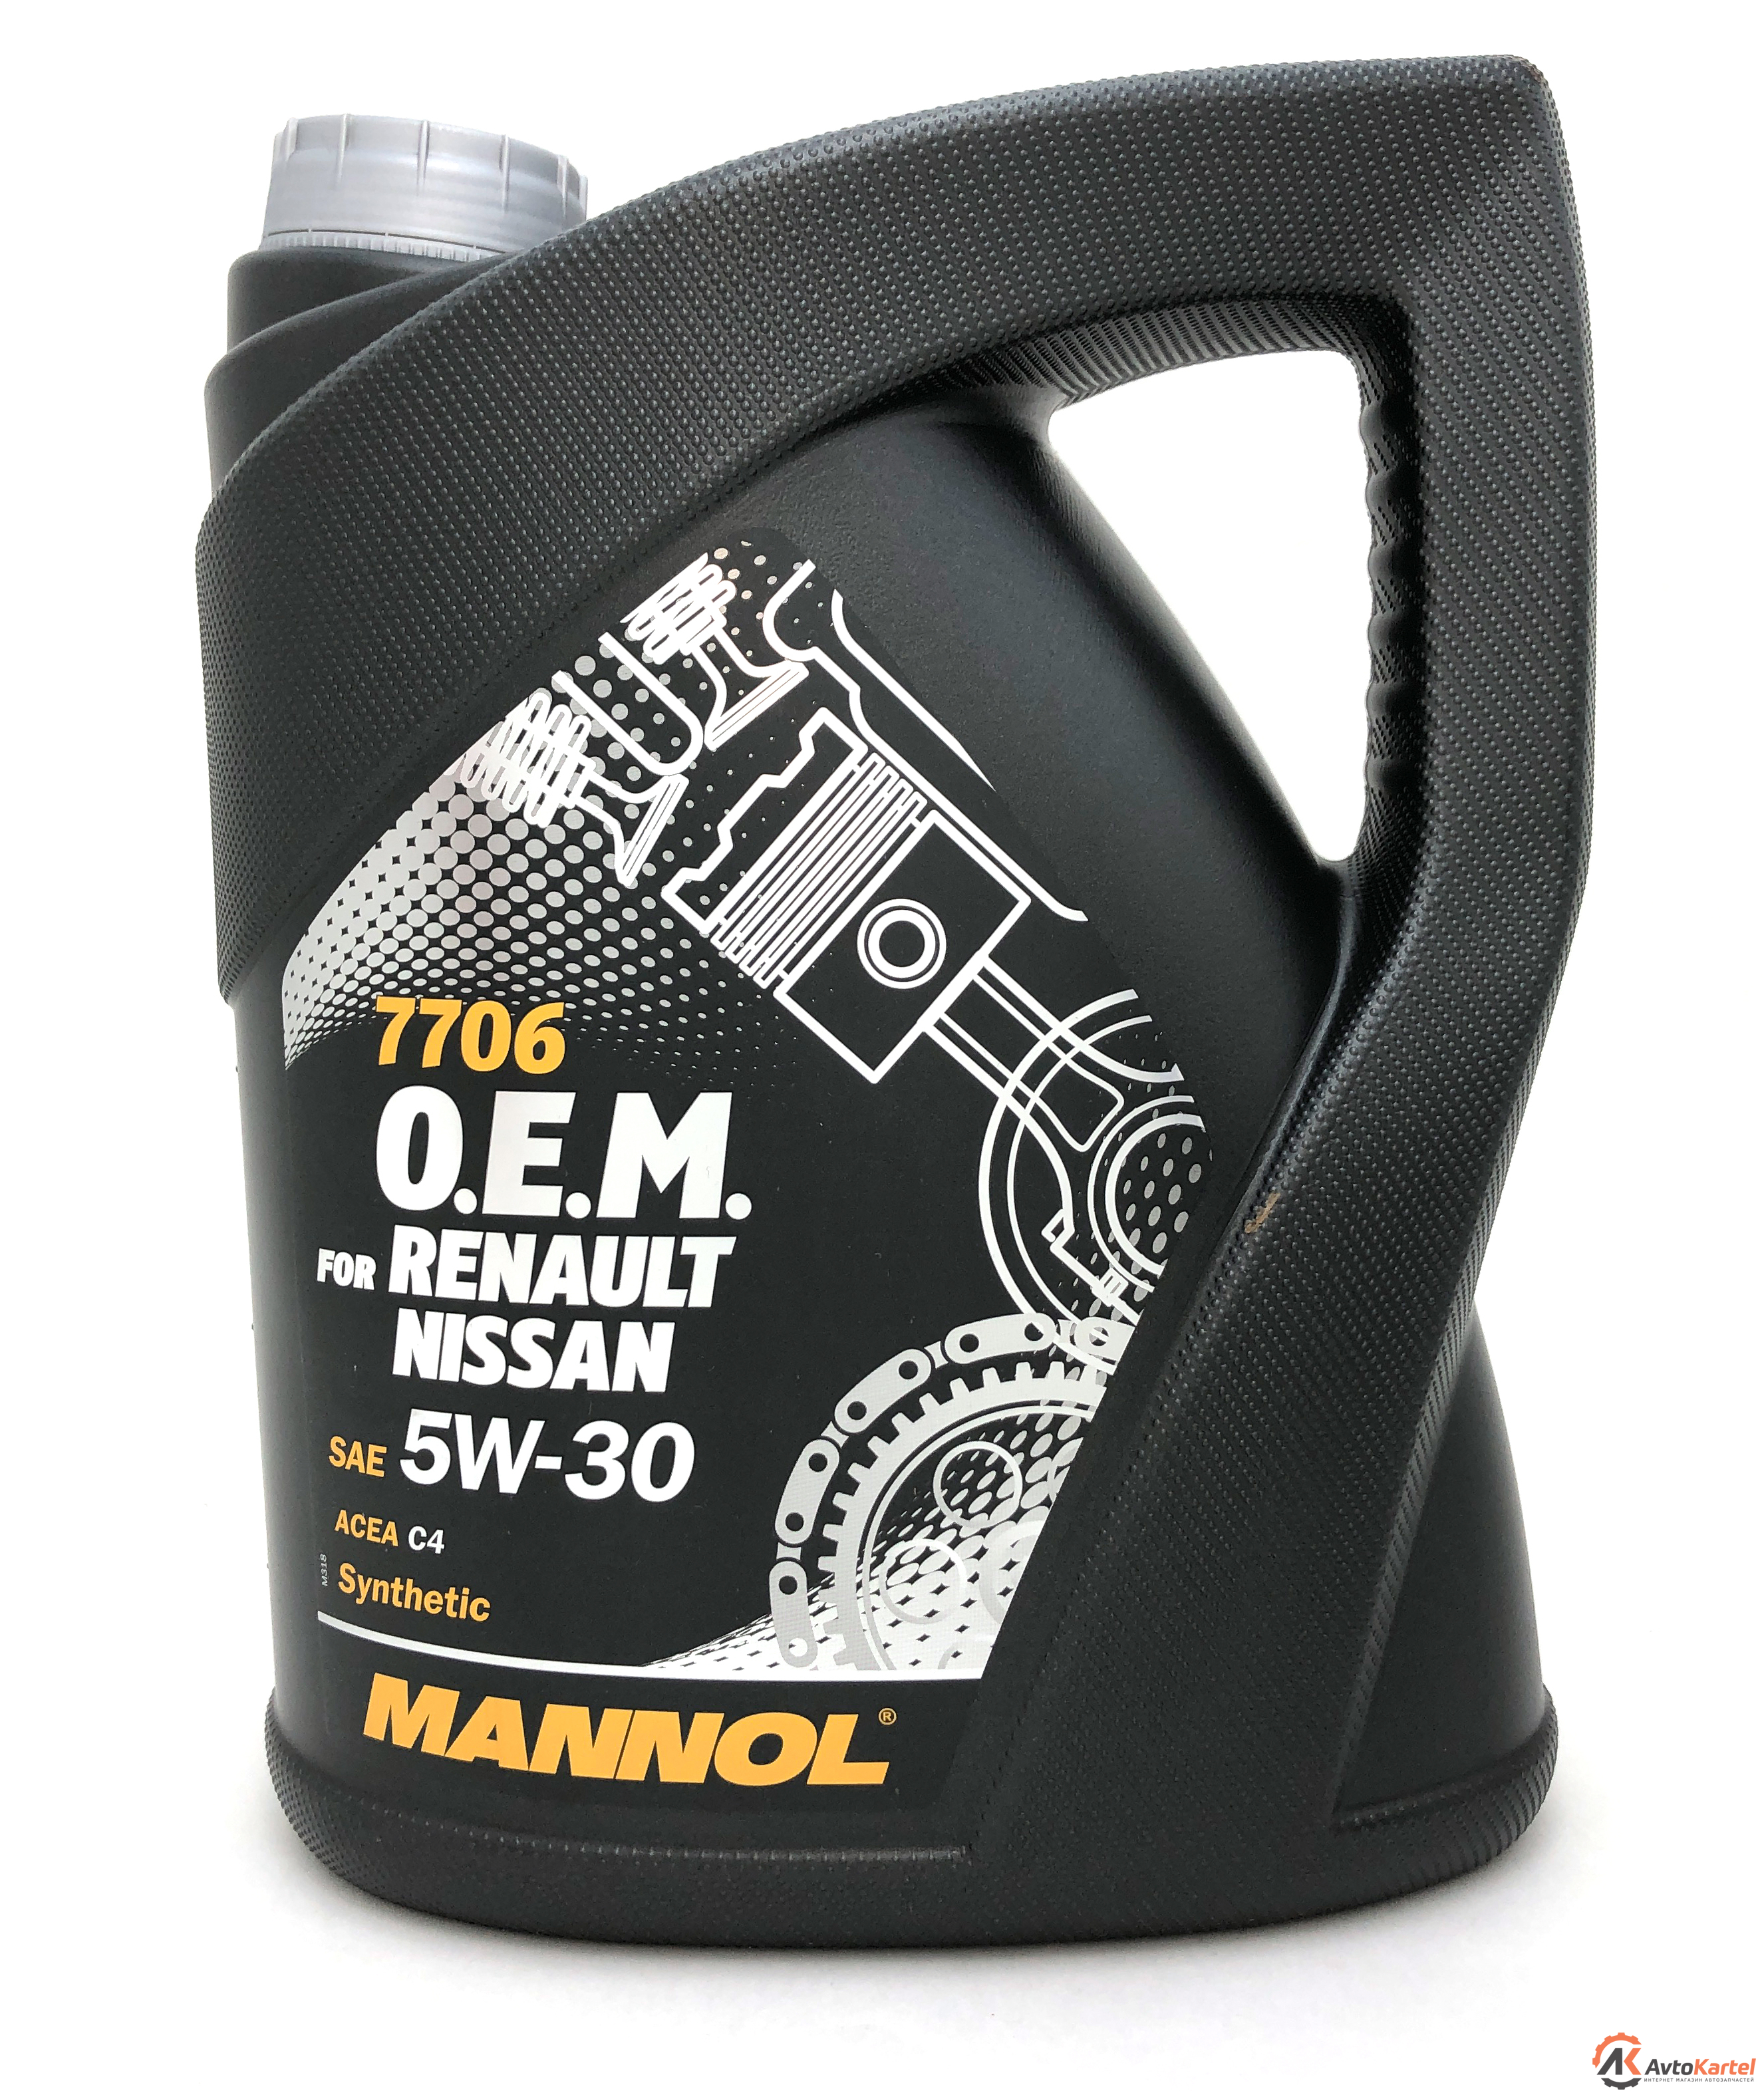 Масло моторное синтетическое O.E.M. MANNOL 7706 OEM for Renault Nissan 5W-30 C4 5л